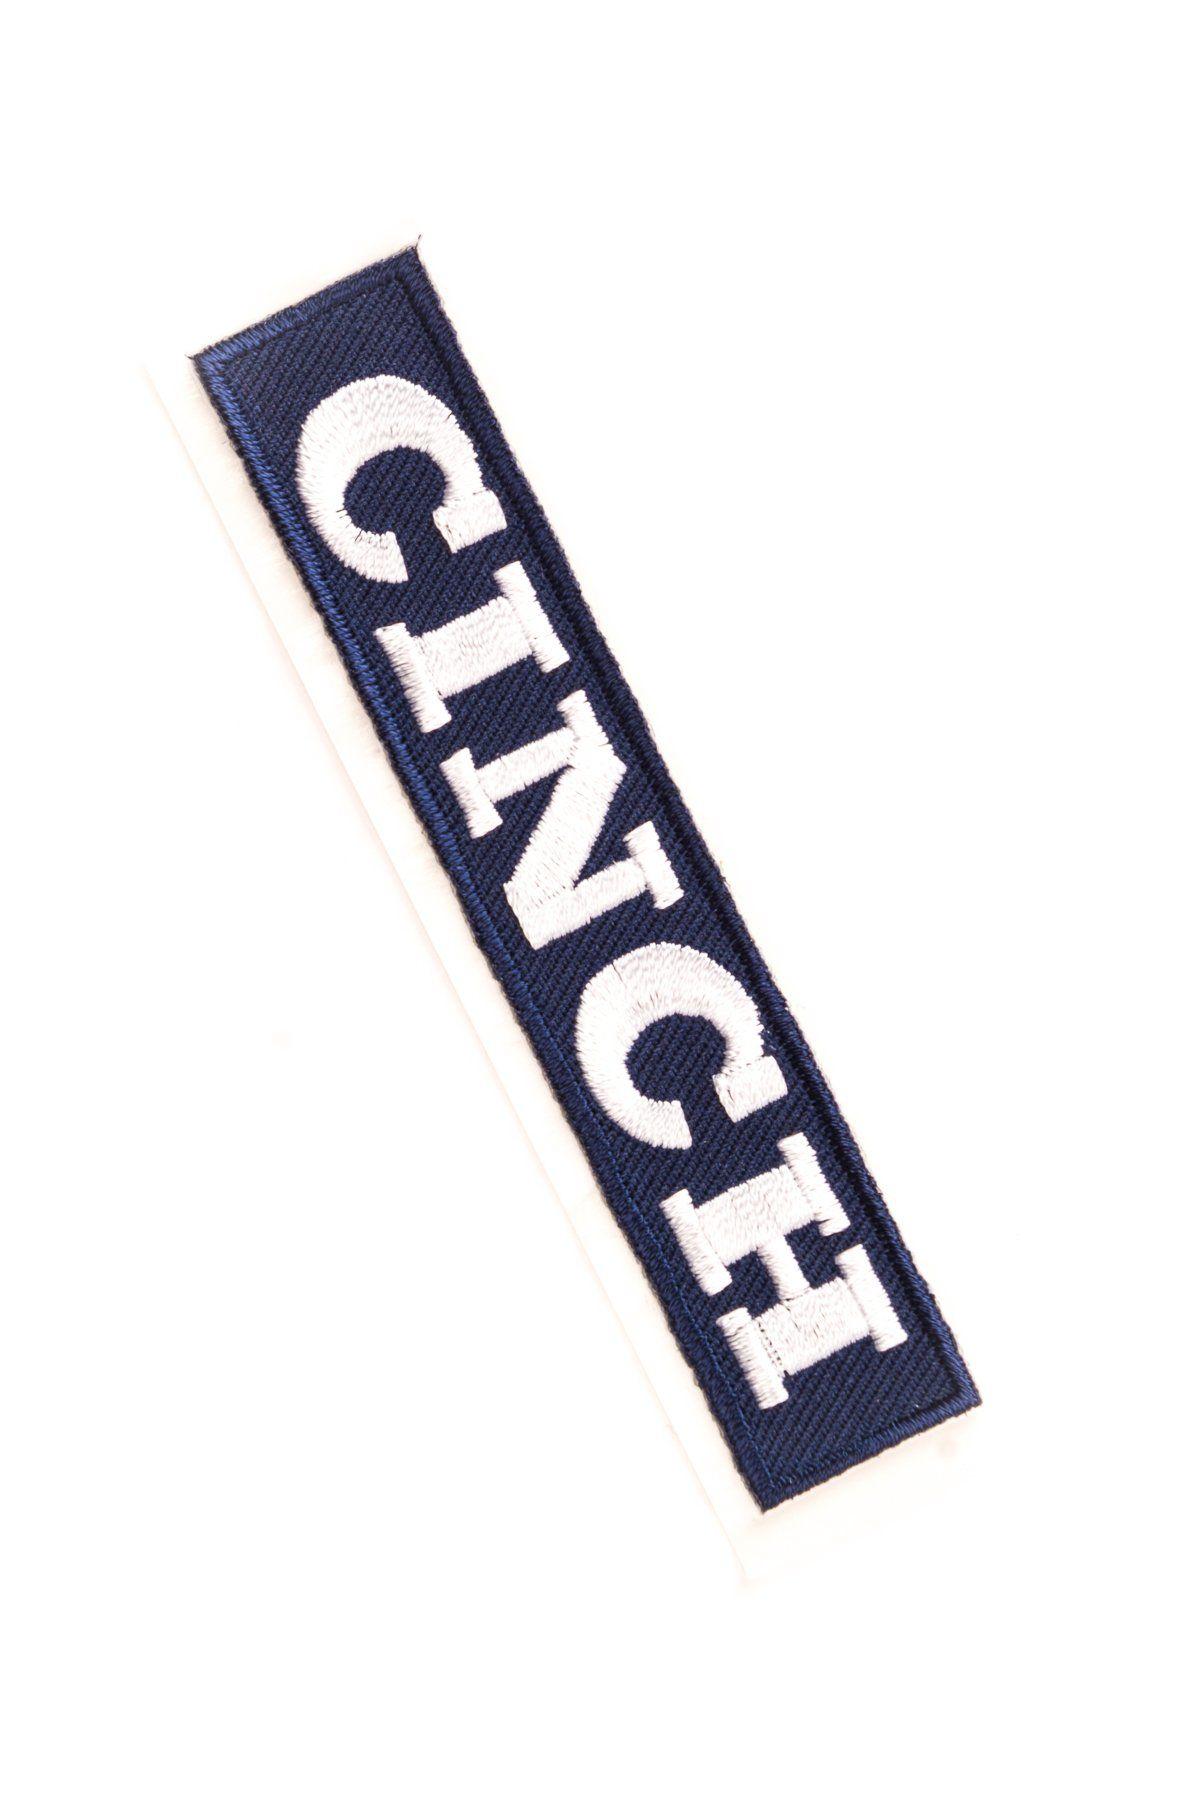 Cinch Logo - Cinch Jeans. CINCH Blue Logo Patch